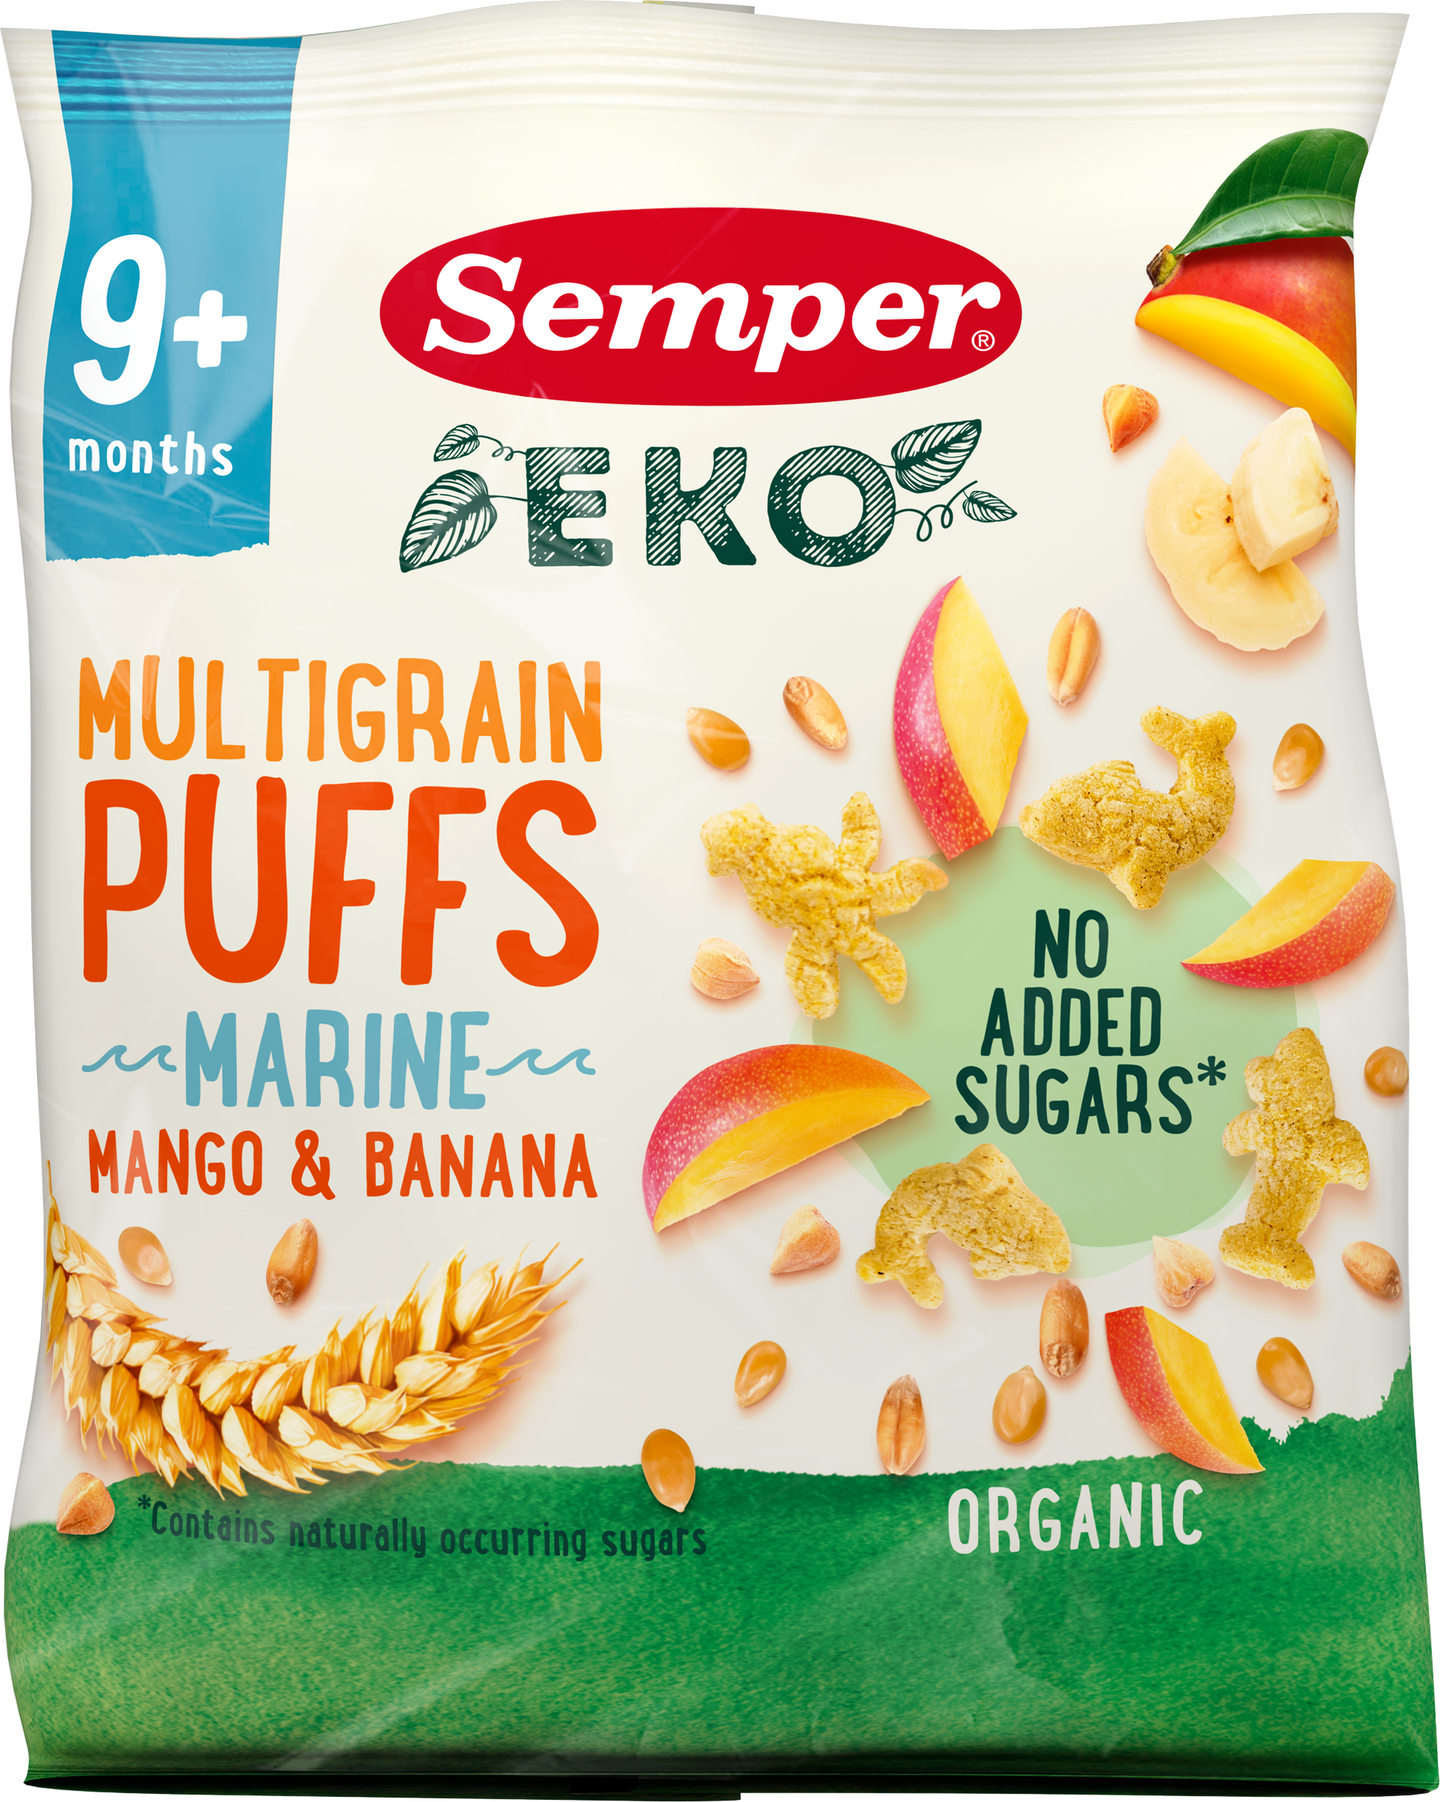 Semper EKO Multigrain Puffs Mango & Banaani luomunaksu lapsille 9+ kk 18g